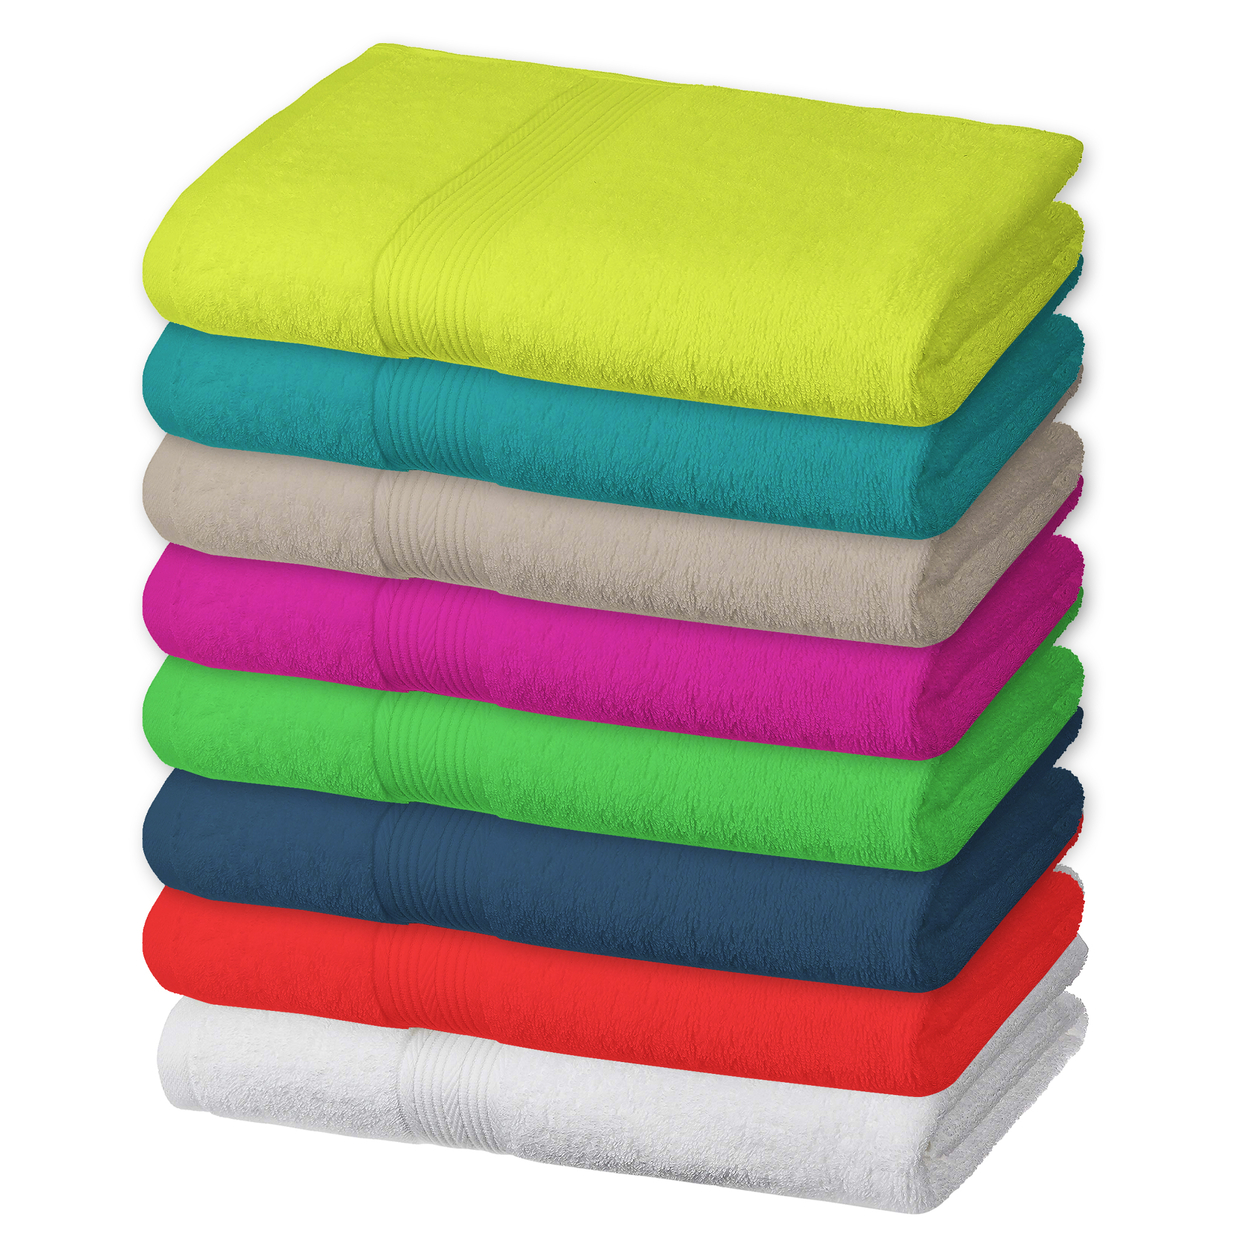 5-Pack: Super Absorbent 100% Cotton 54 X 27 Hotel Beach Bath Towels - Bright